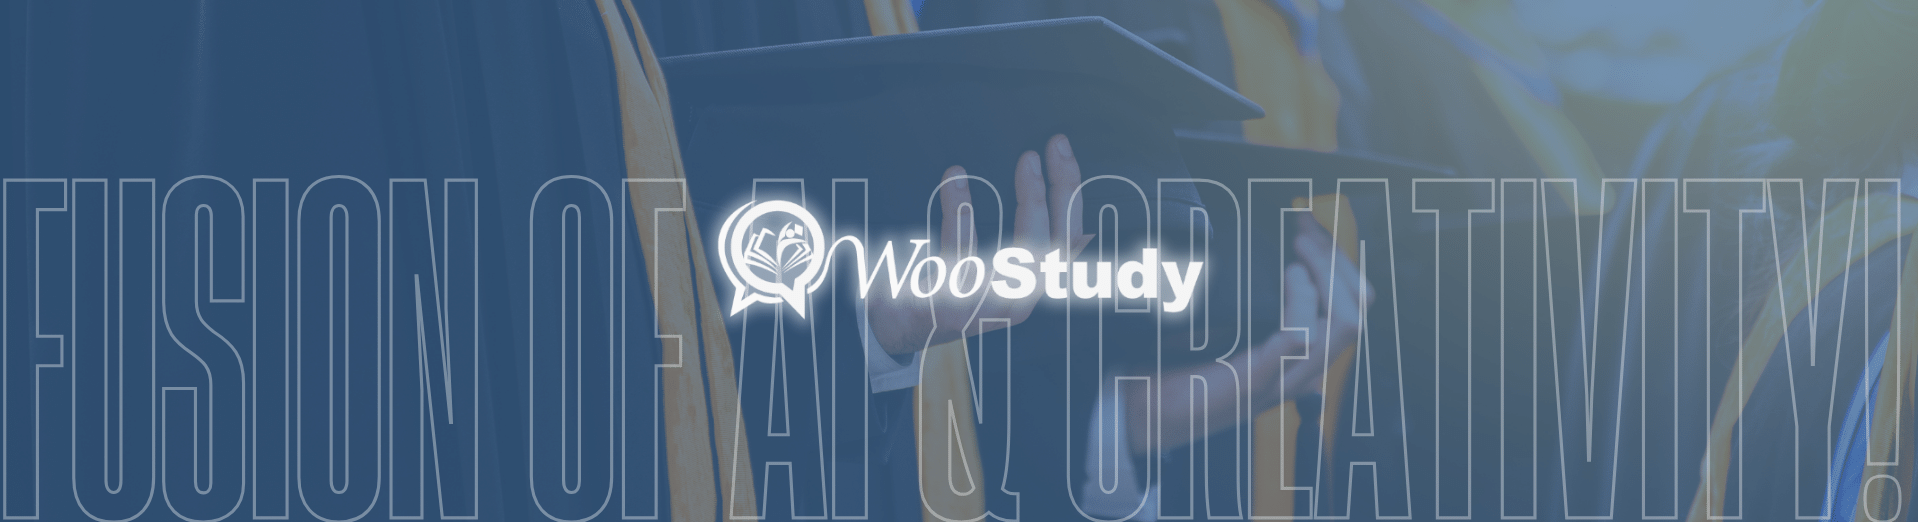 Woostudy 360 Case Study